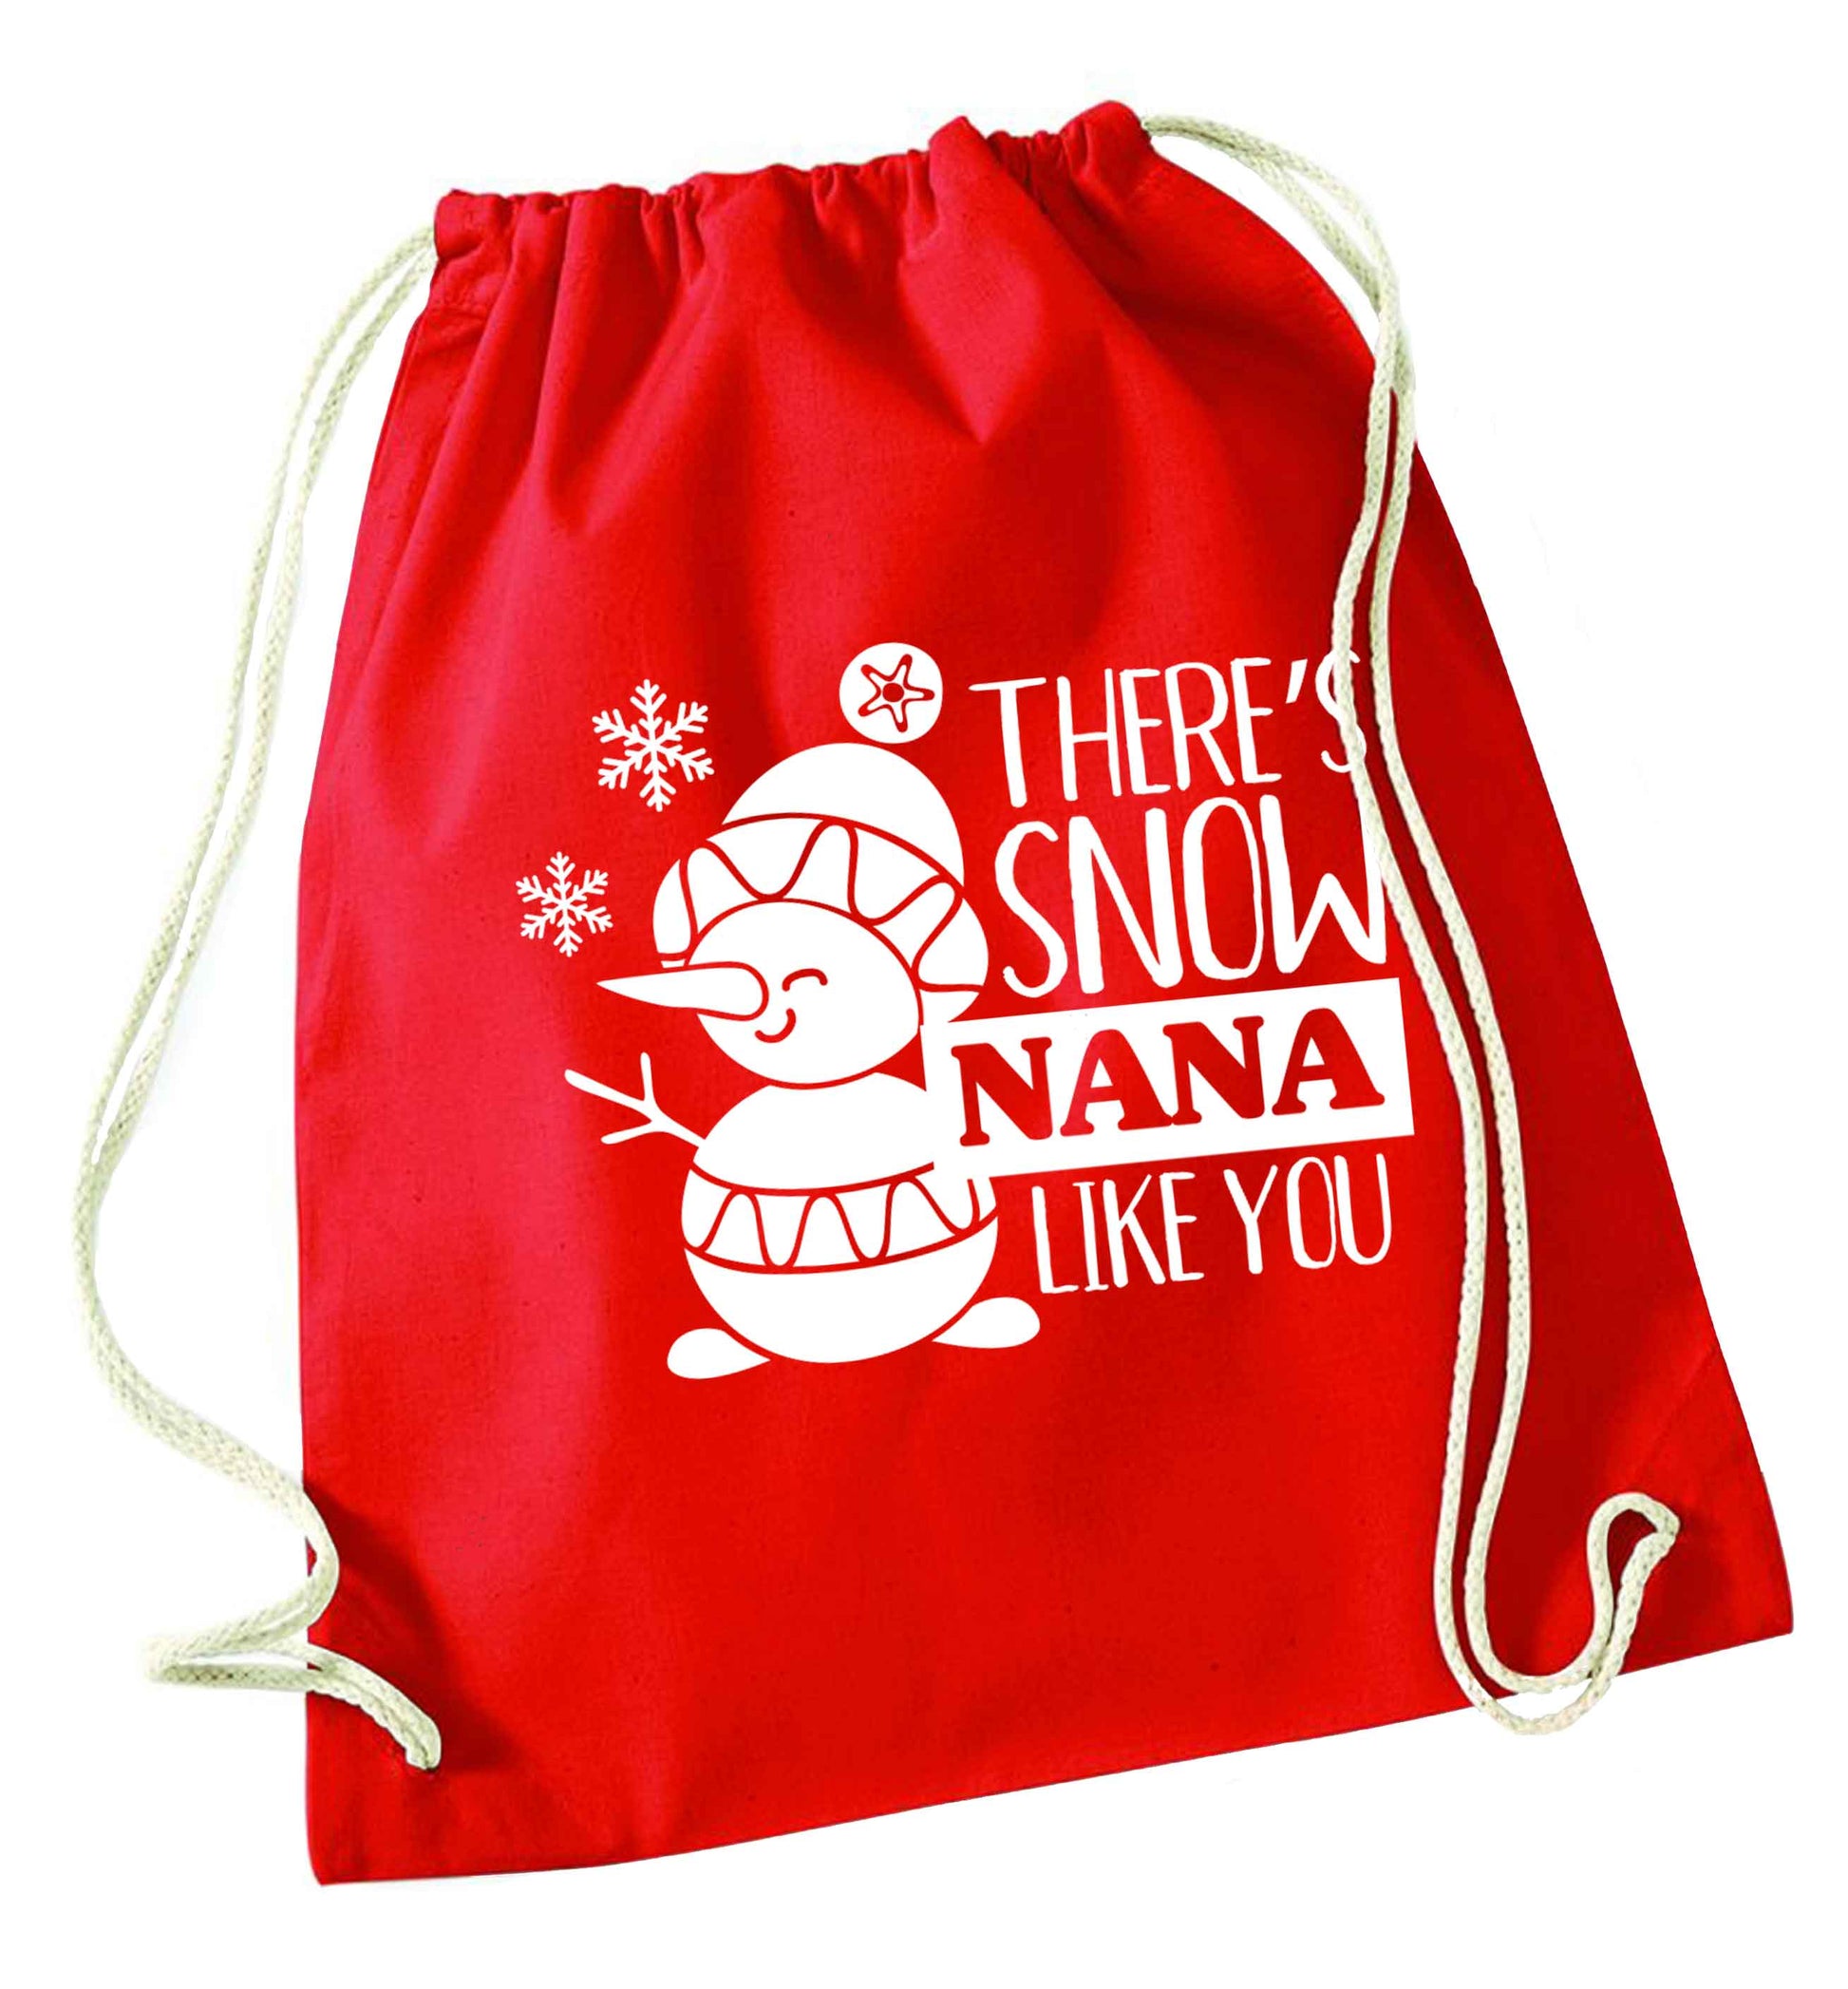 There's snow nana like you red drawstring bag 